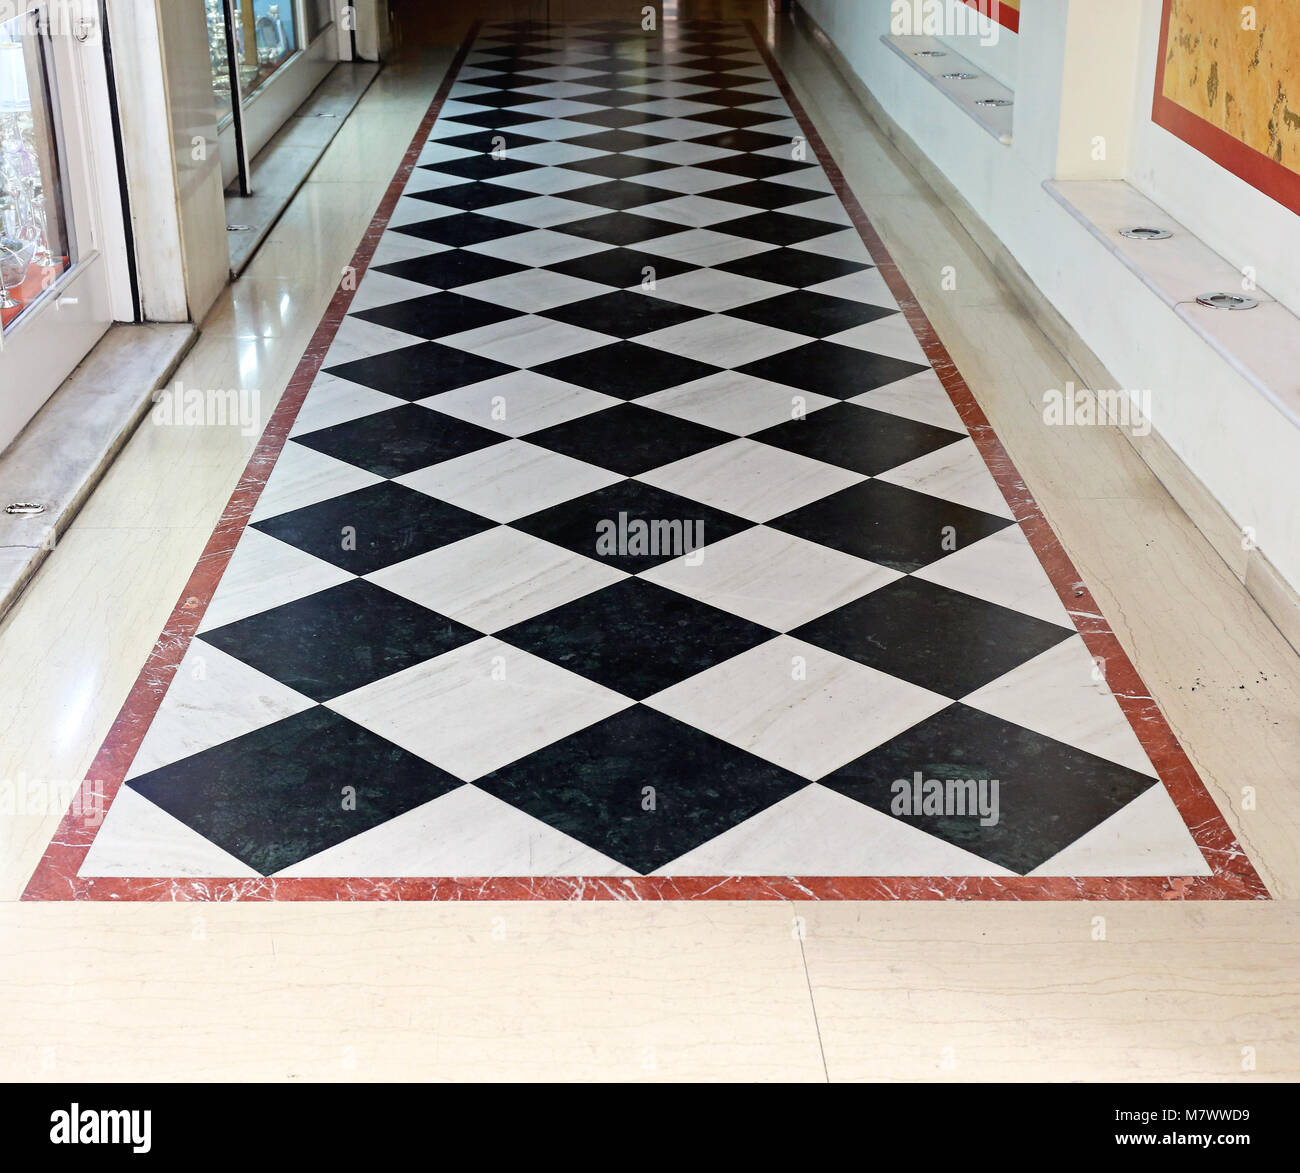 Black And White Checkered Floor Tiles In Corridor Stock Photo